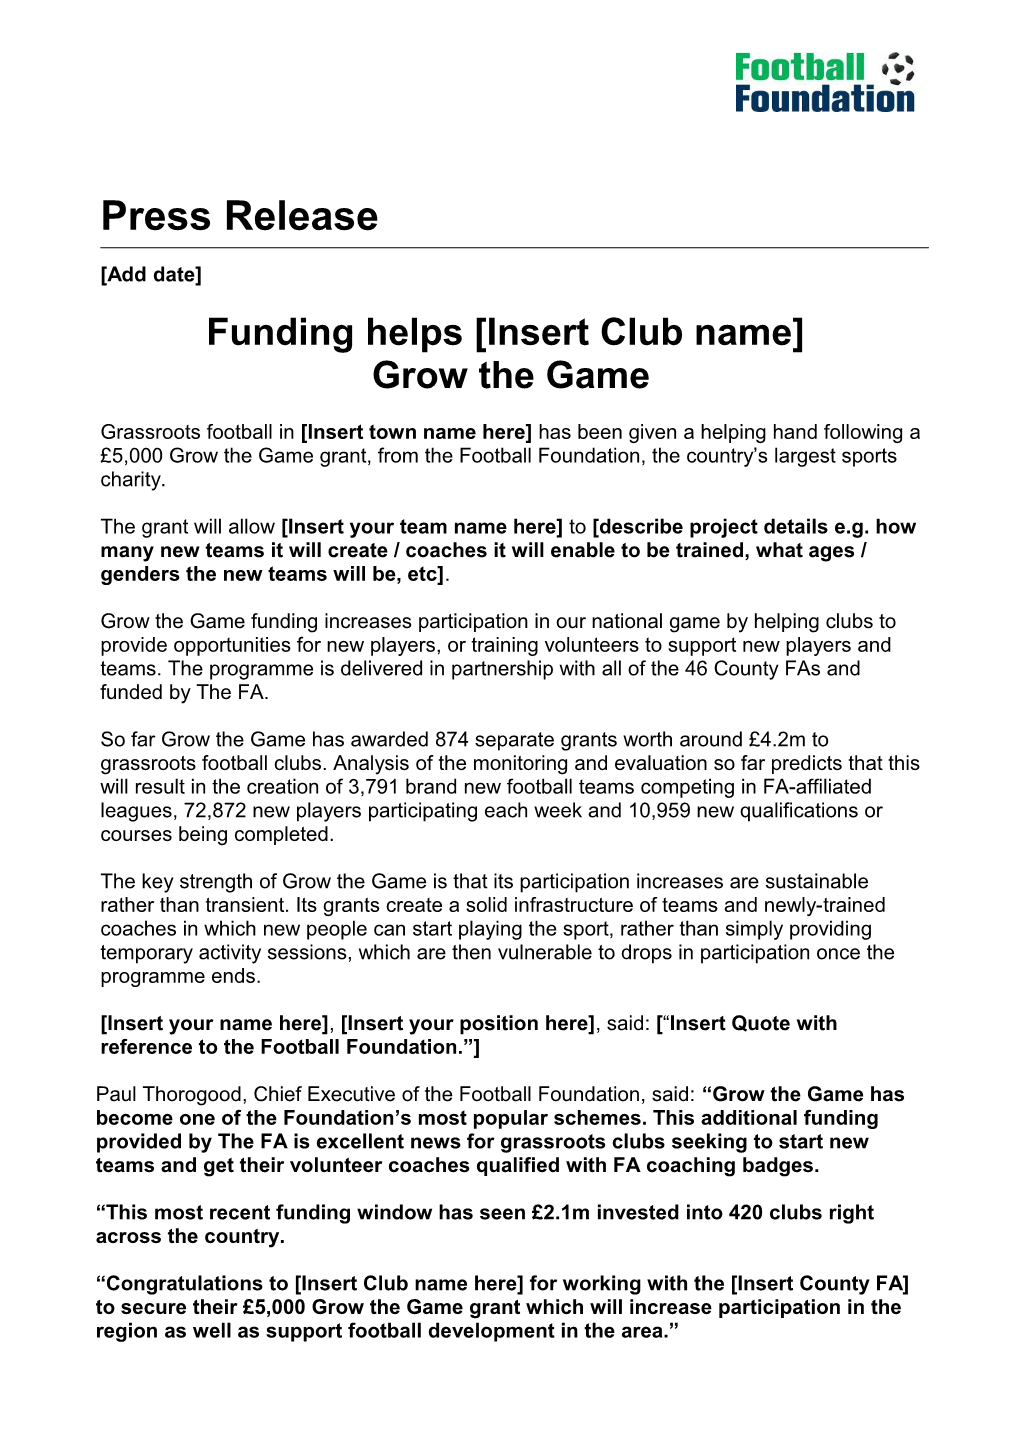 Funding Helps Insert Club Name